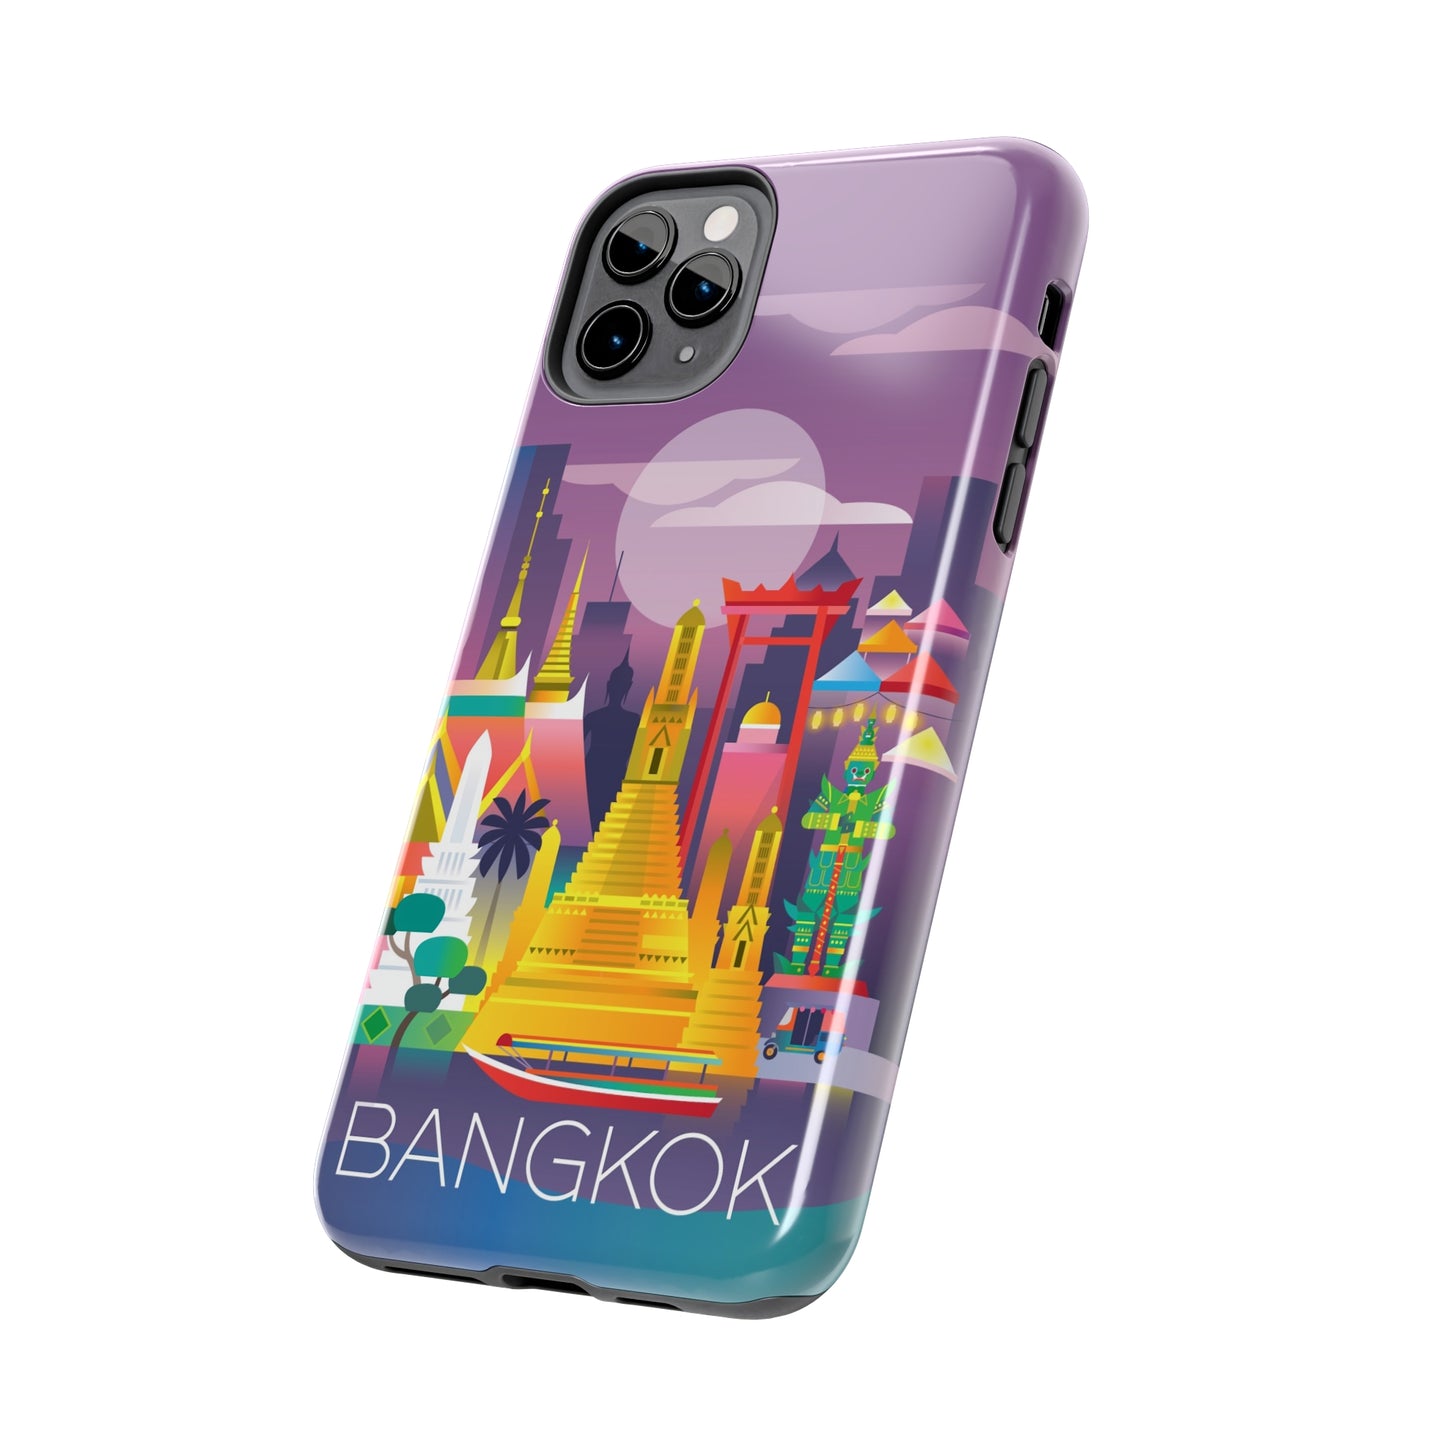 Coque de téléphone Bangkok